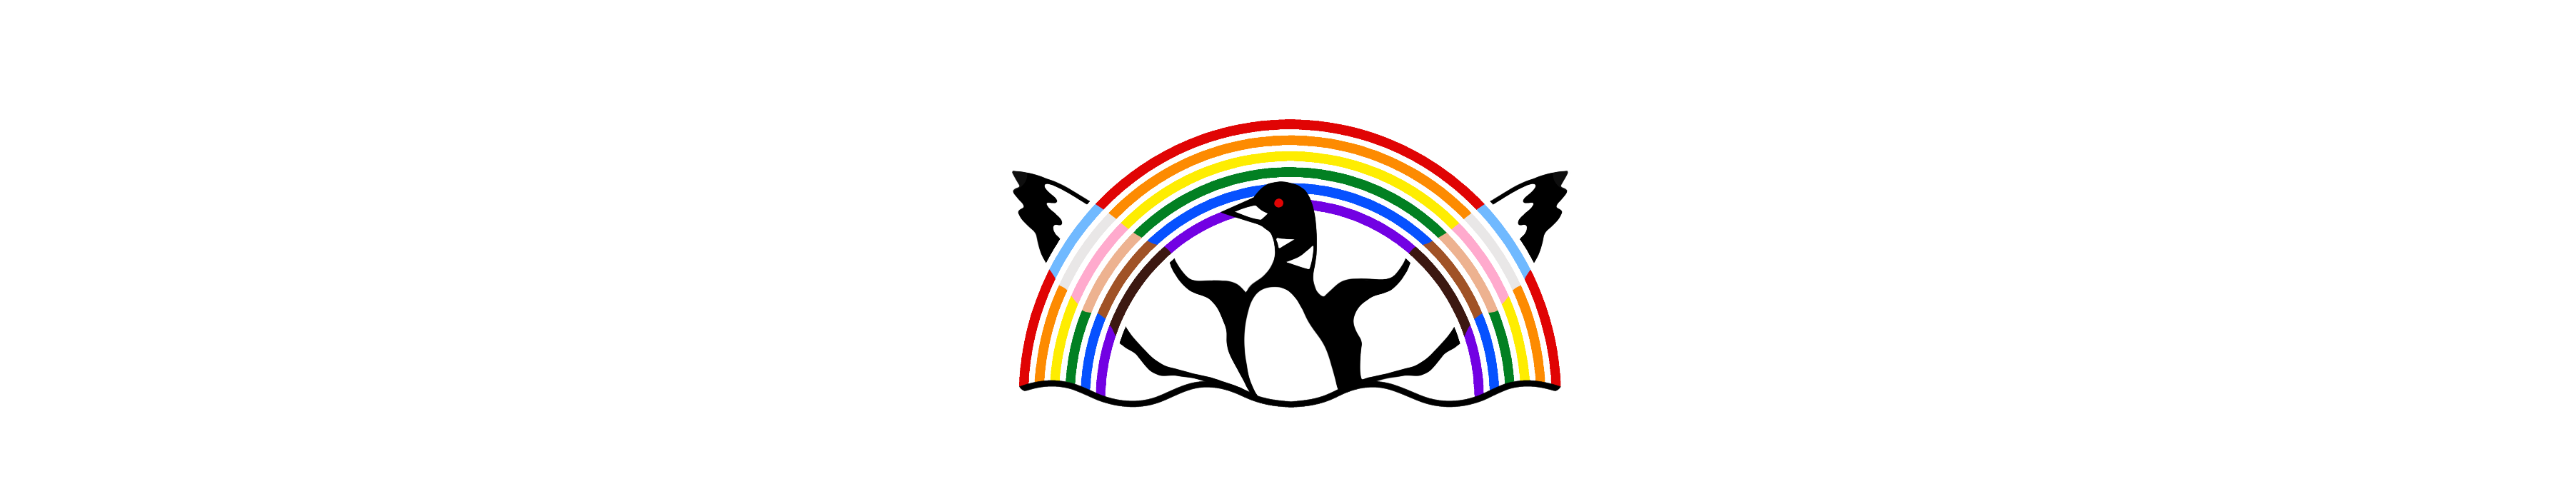 NEKRC Rainbow Loon logo with white background